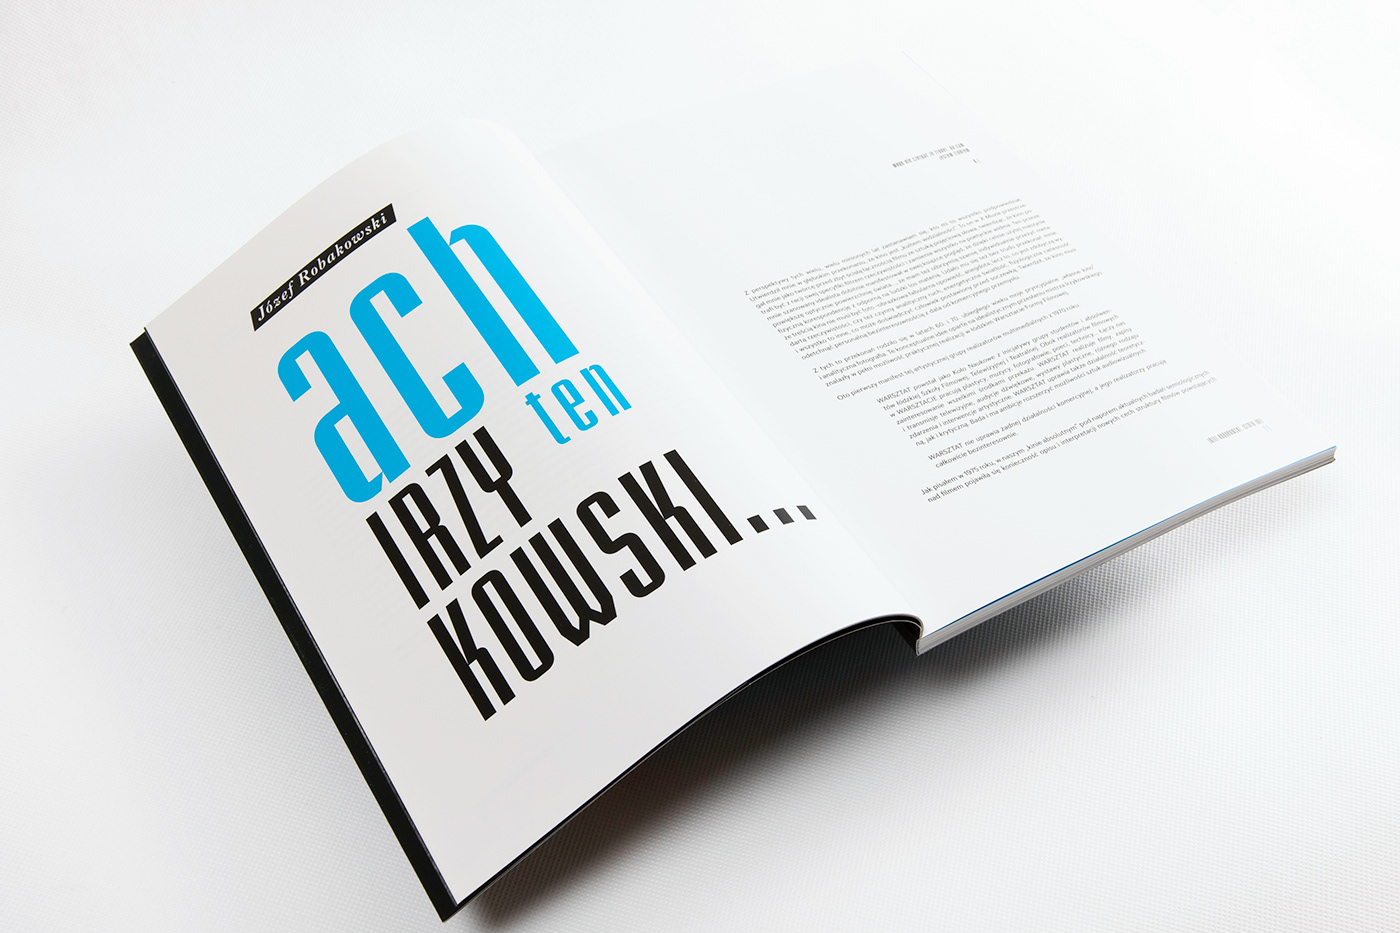 graphic design  book cover idea robakowski museum book design editorial conceptual polish avant-garde poster